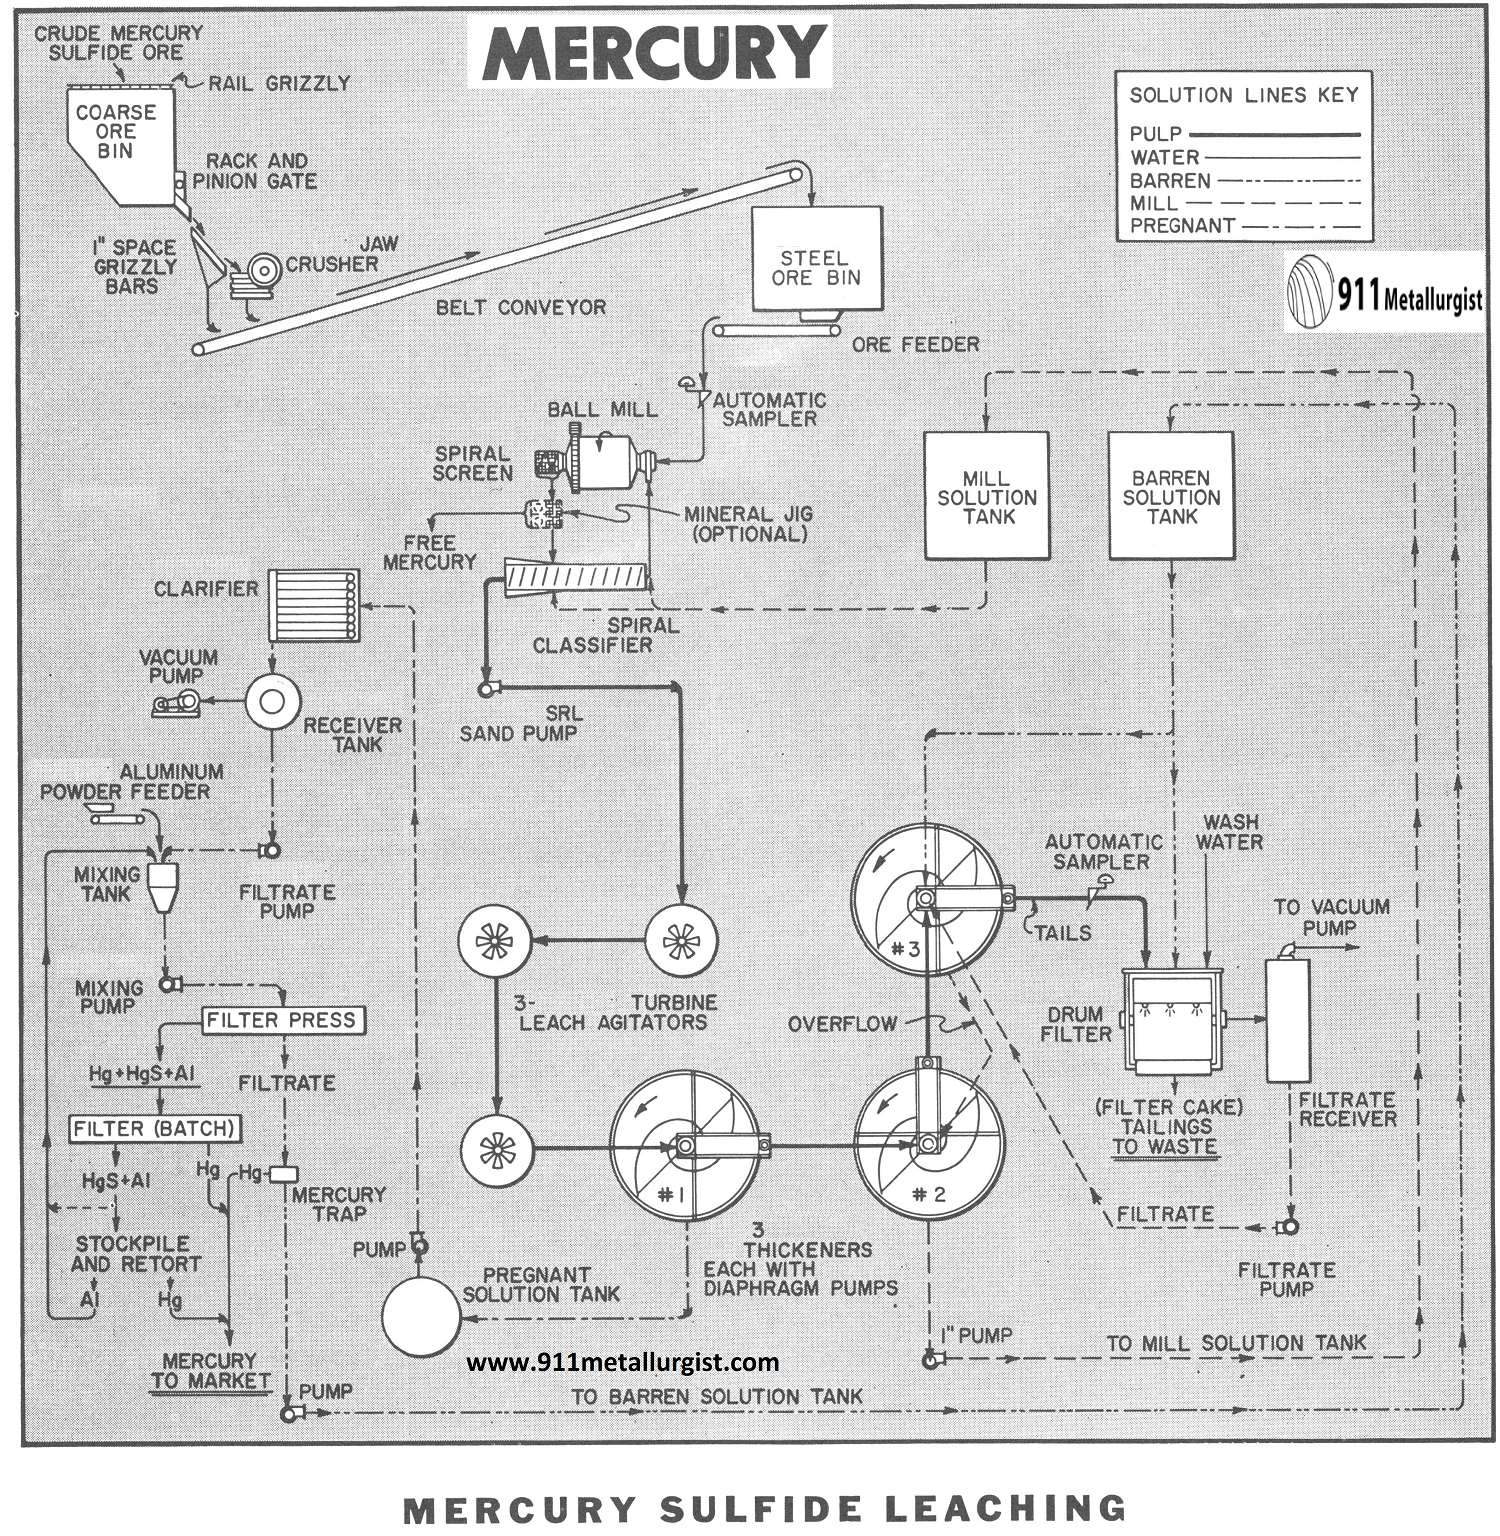 Mercury Sulfide Leaching